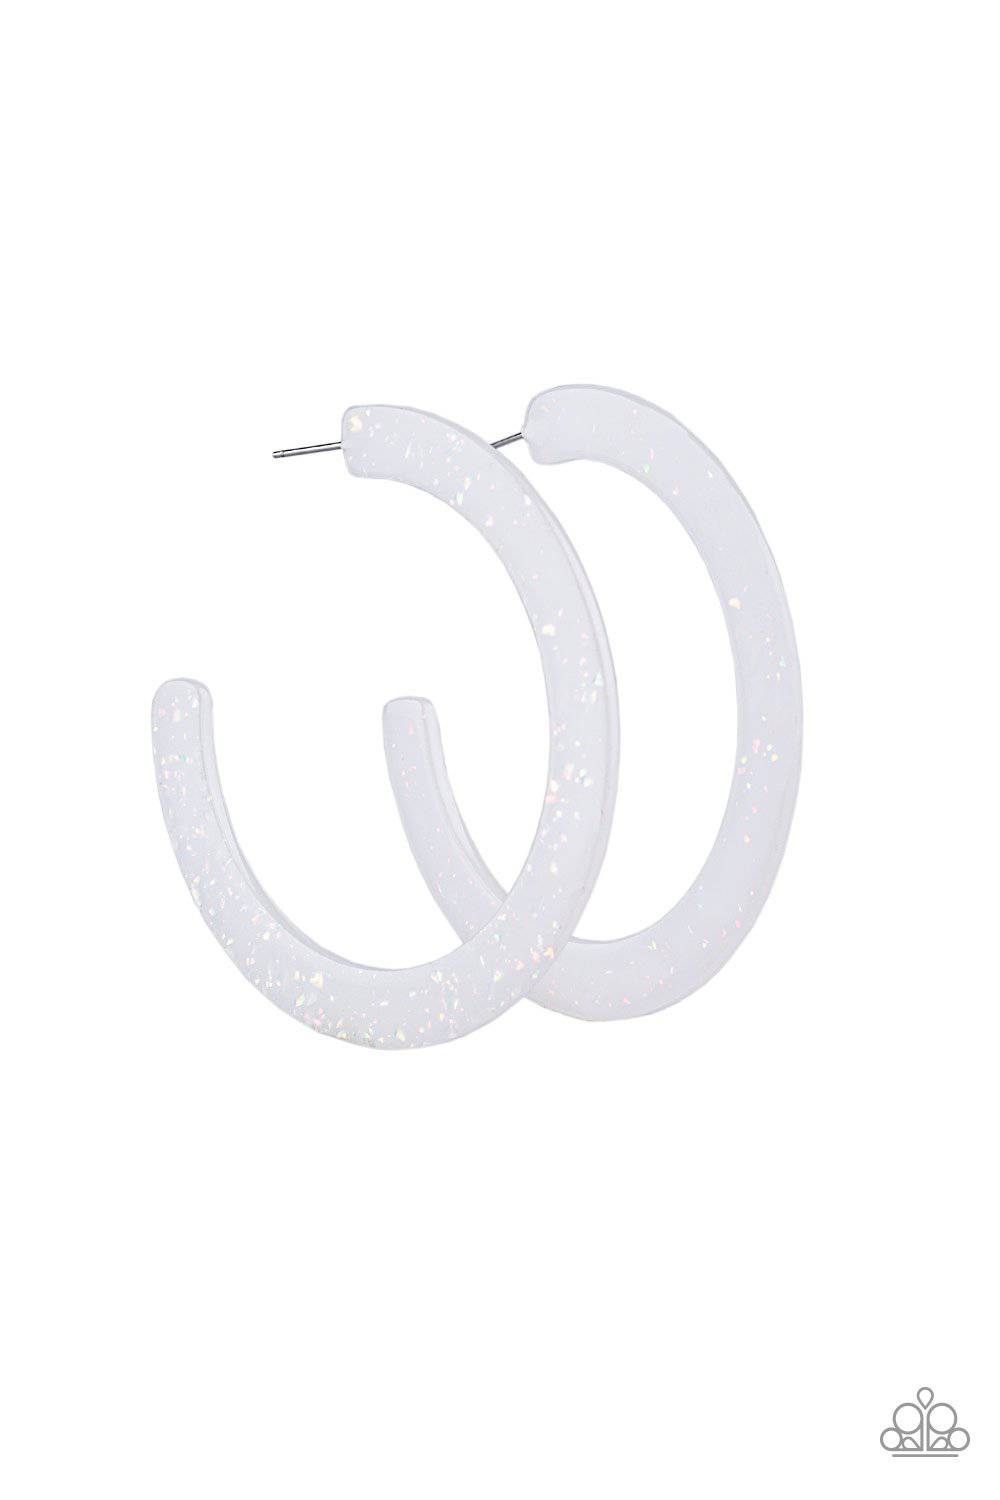 HAUTE Tamale - White Acrylic Earrings - Paparazzi Accessories - GlaMarous Titi Jewels